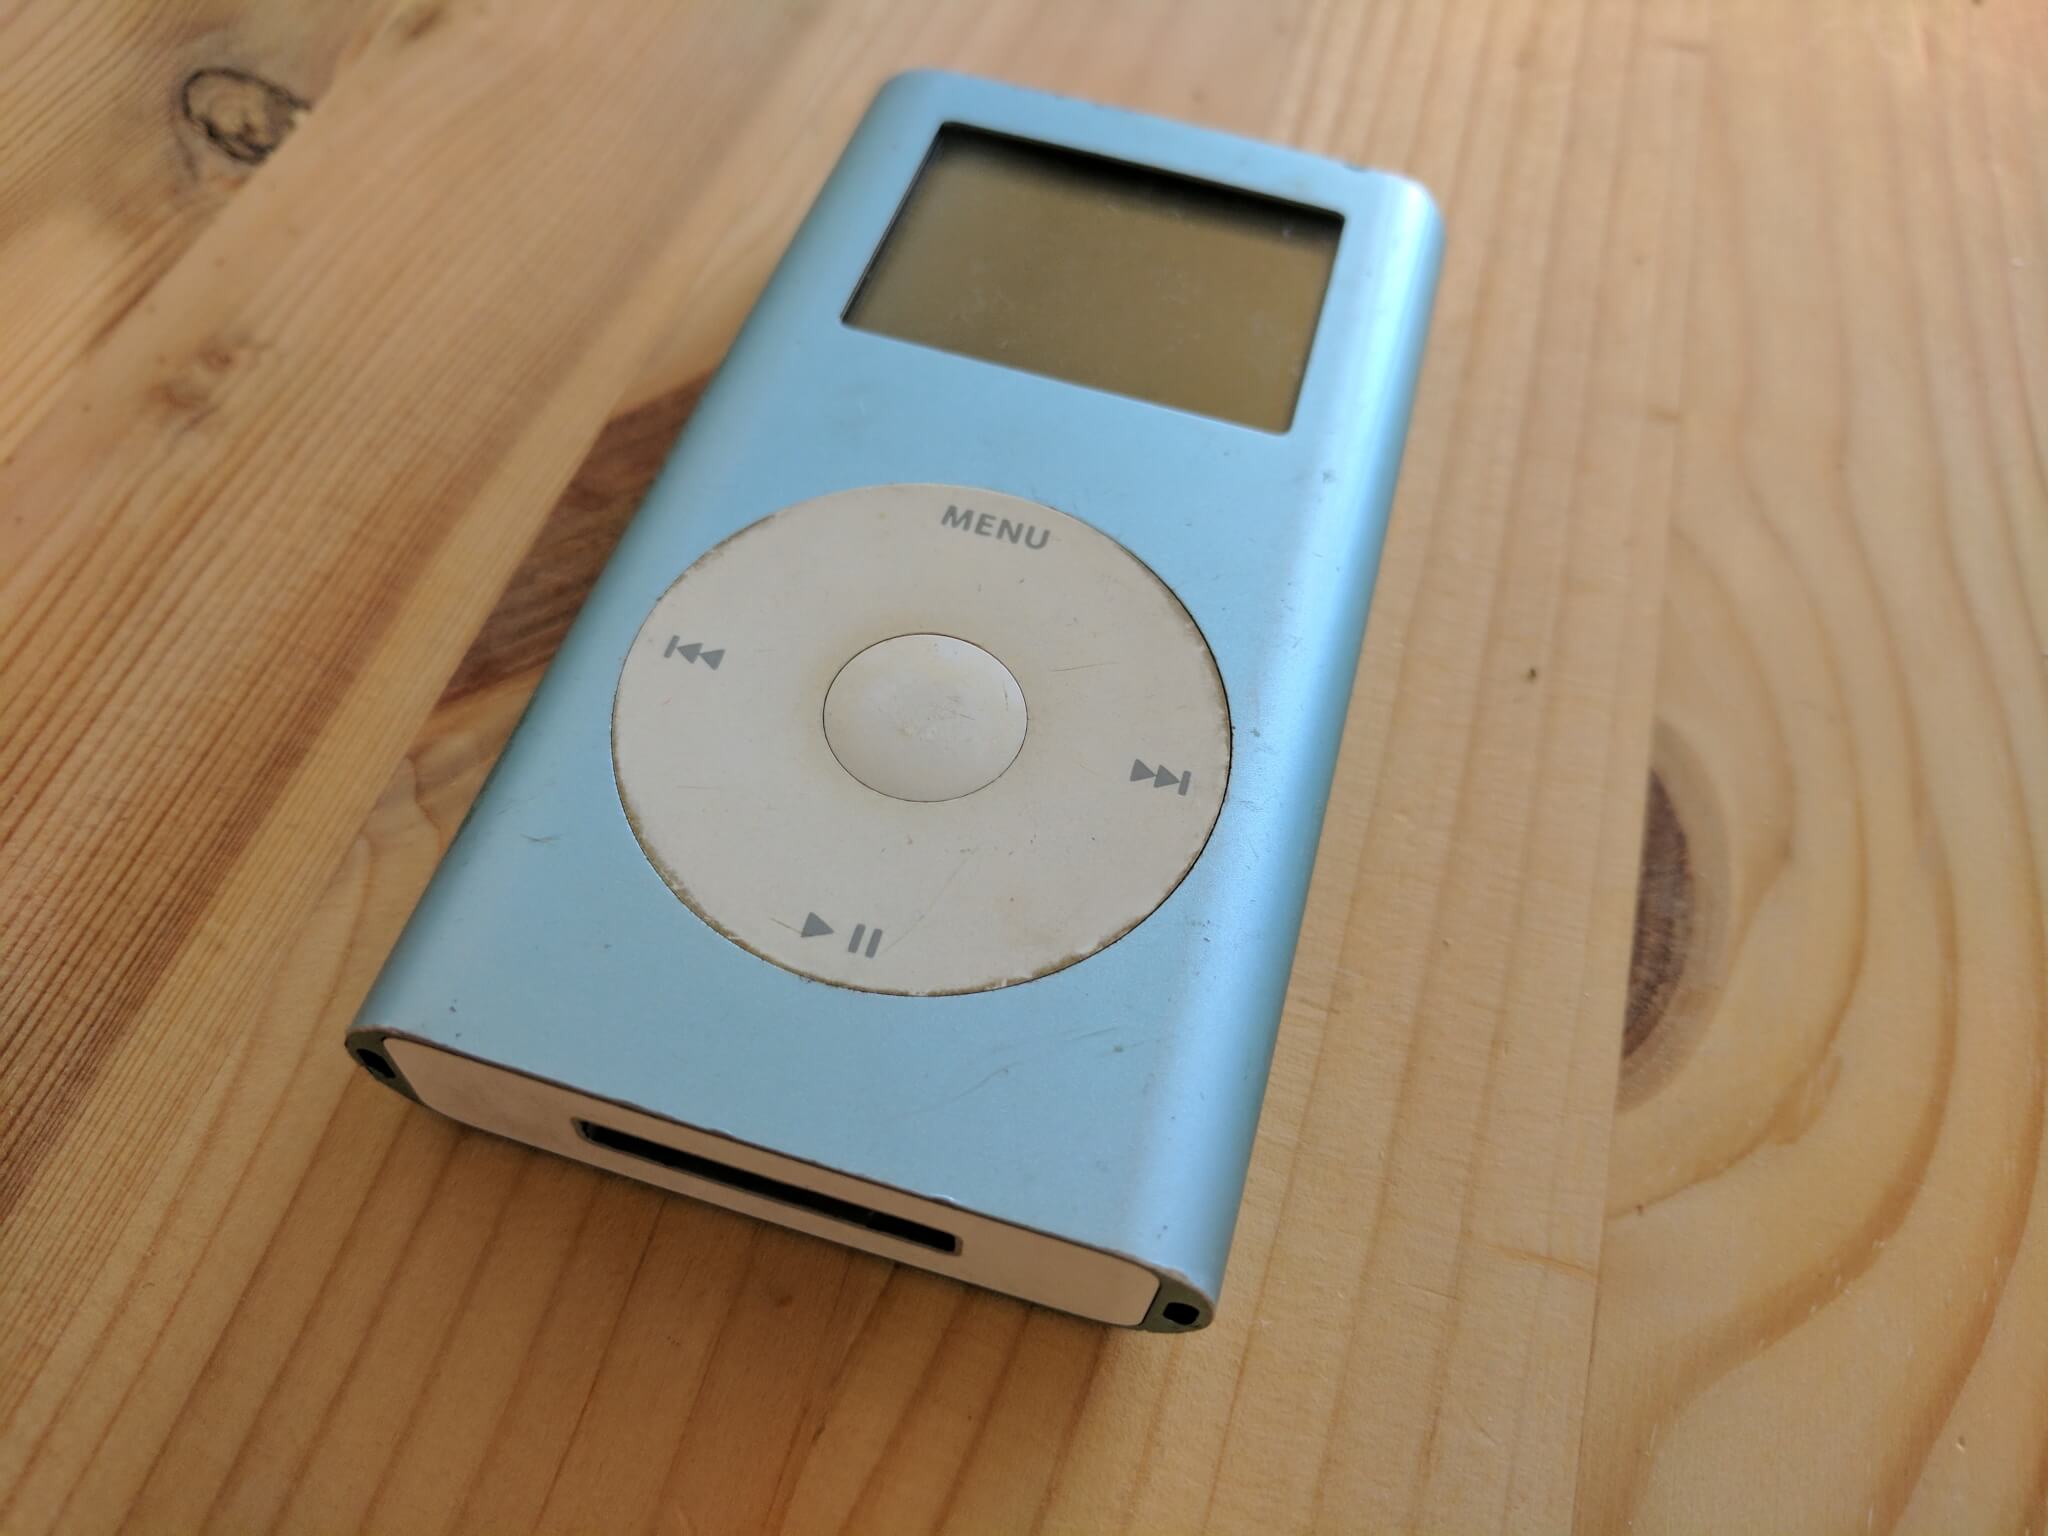 My iPod mini from 2004.